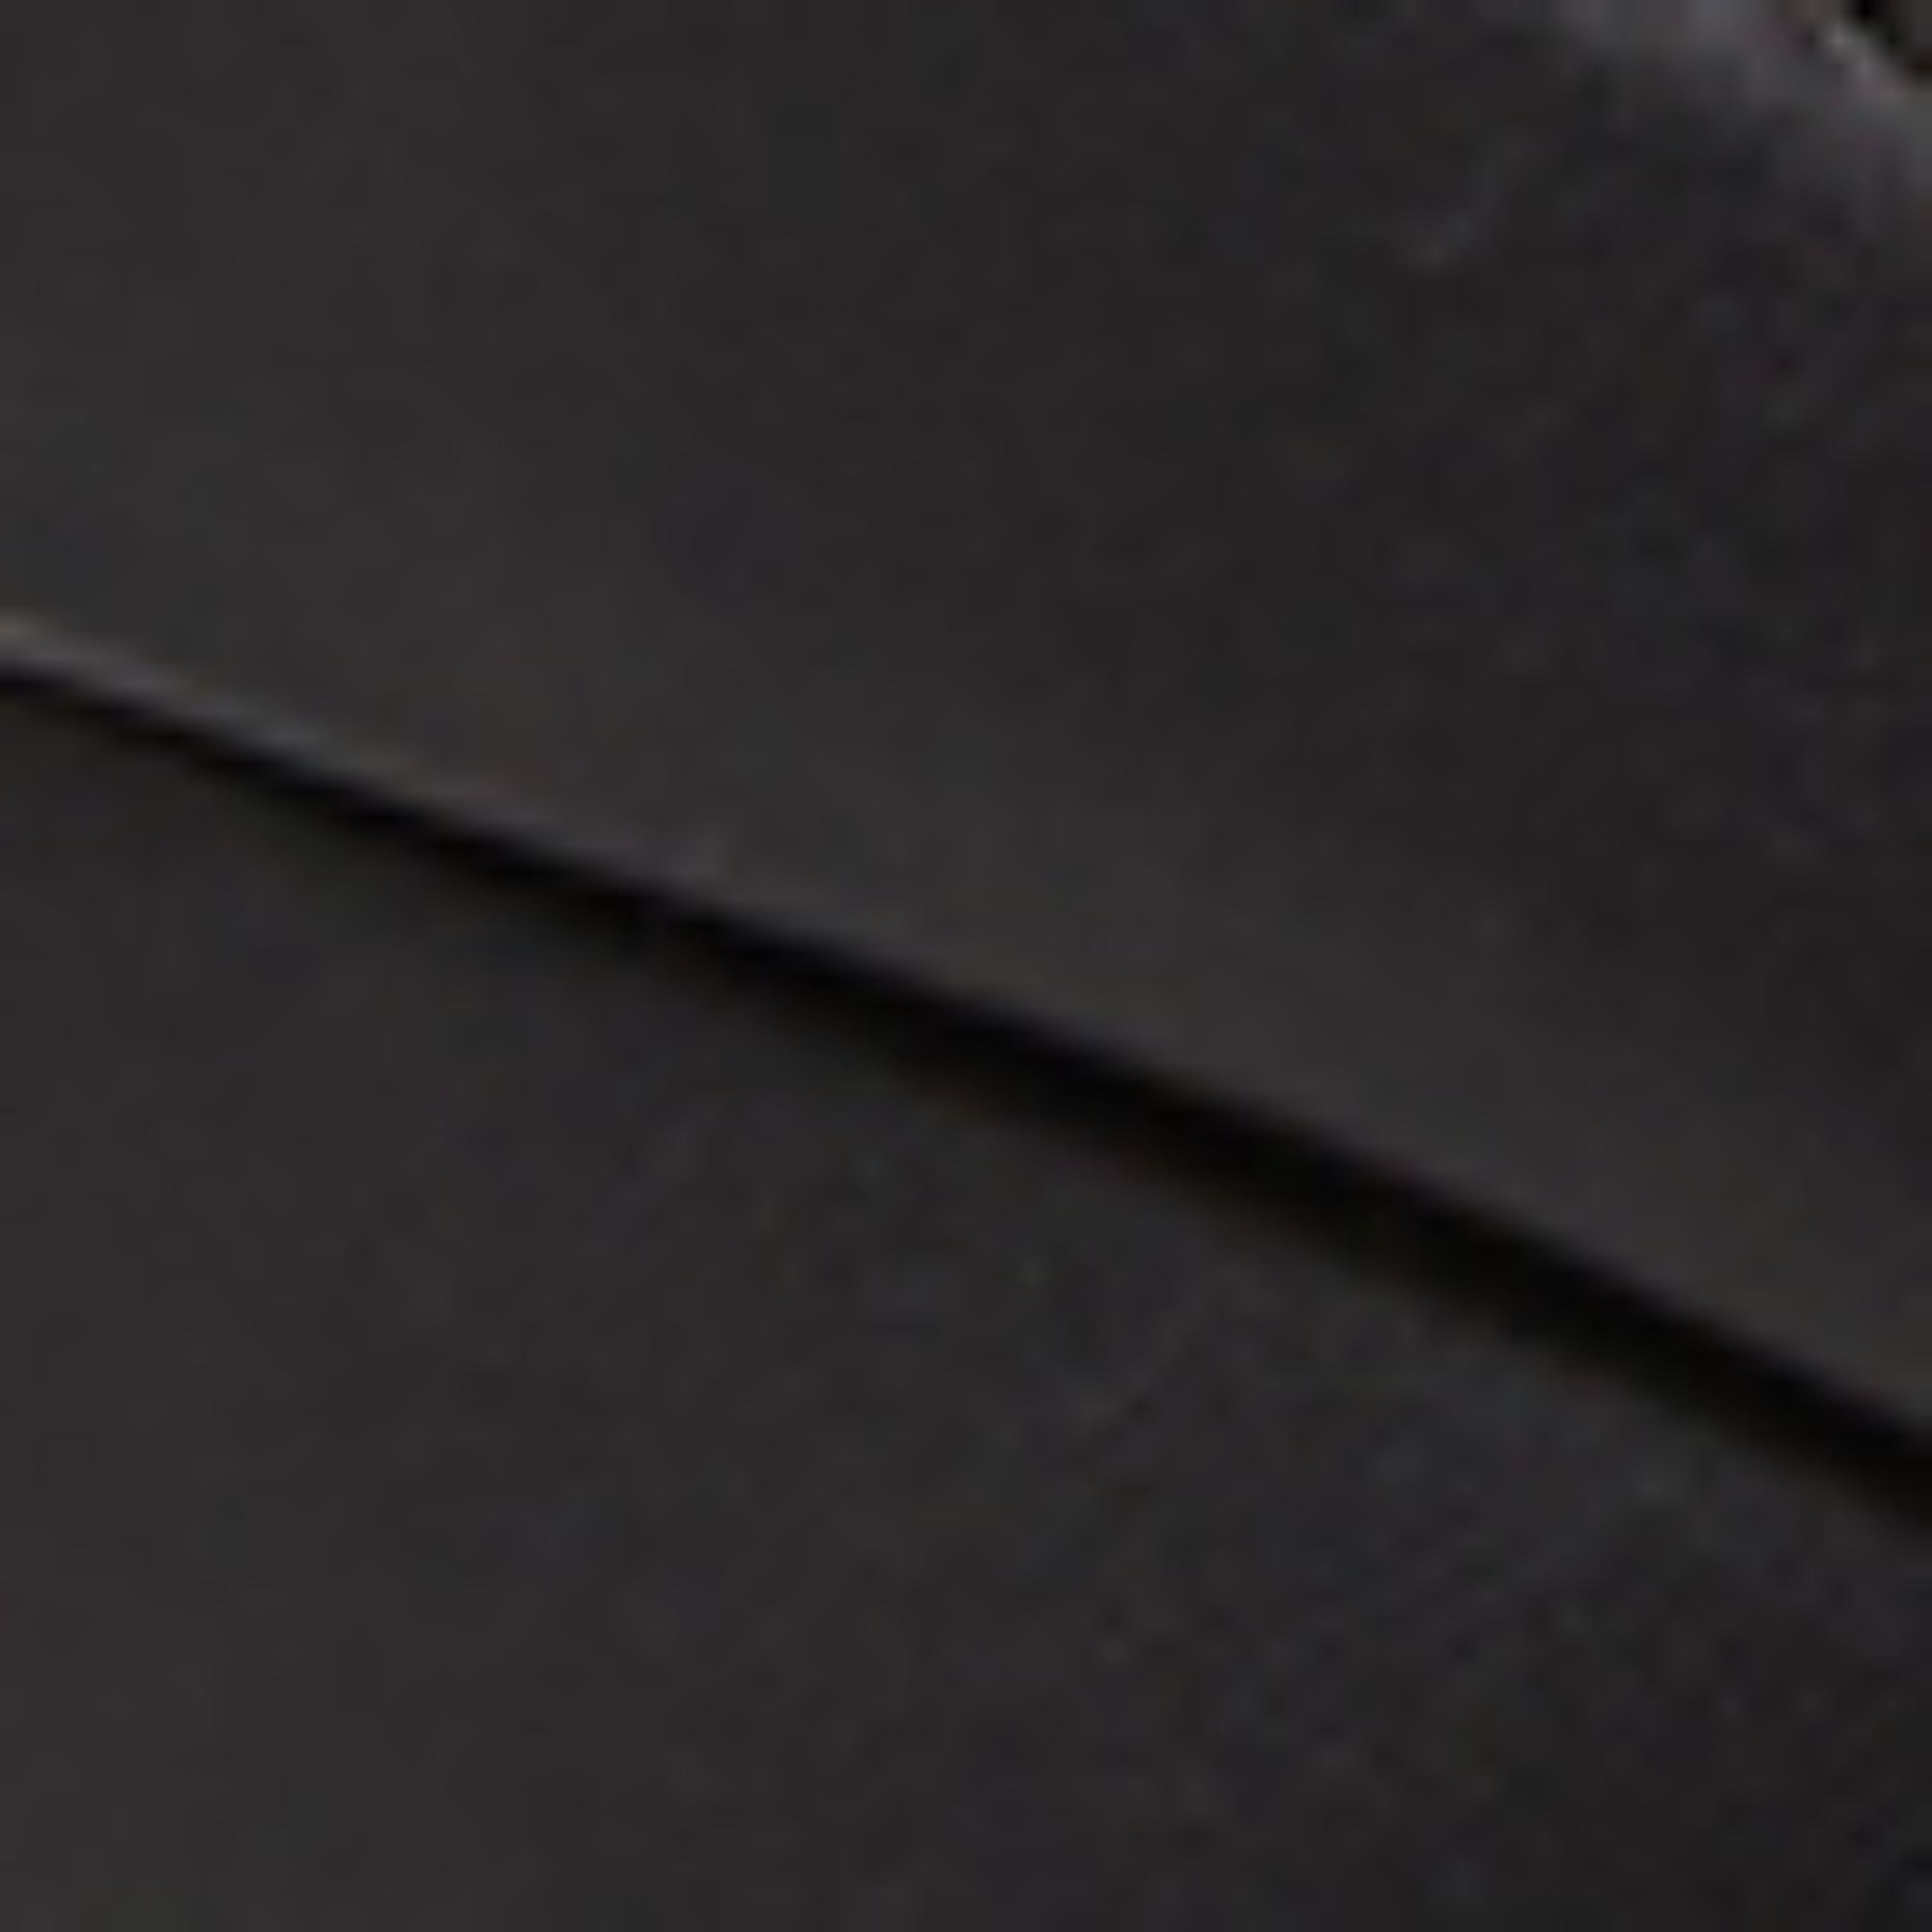 Gancini Sneaker in Calf Leather - Black/Vanilla